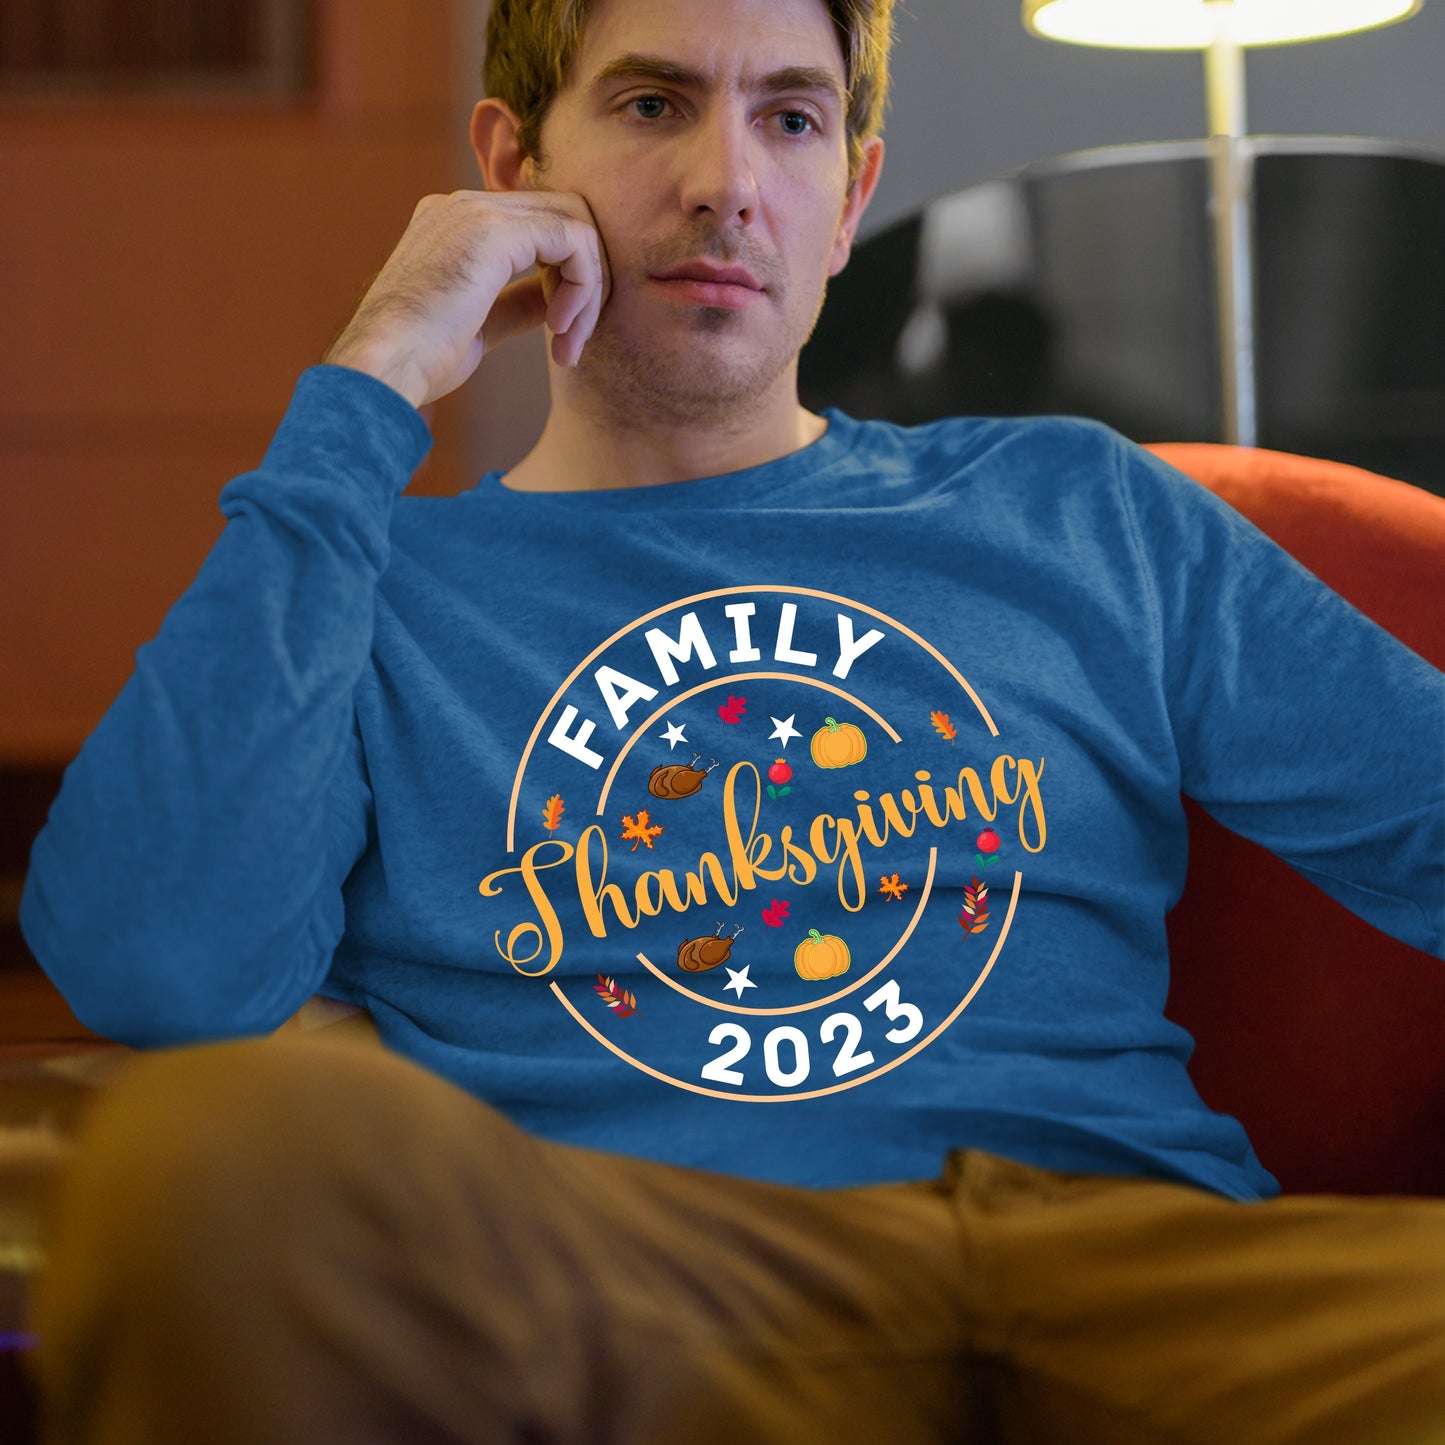 Thanksgiving Family Sweatshirt, Thanksgiving Sweatshirt, Thanksgiving Sweater for Men, Thanksgiving Sweater for Women, Thanksgiving Gift